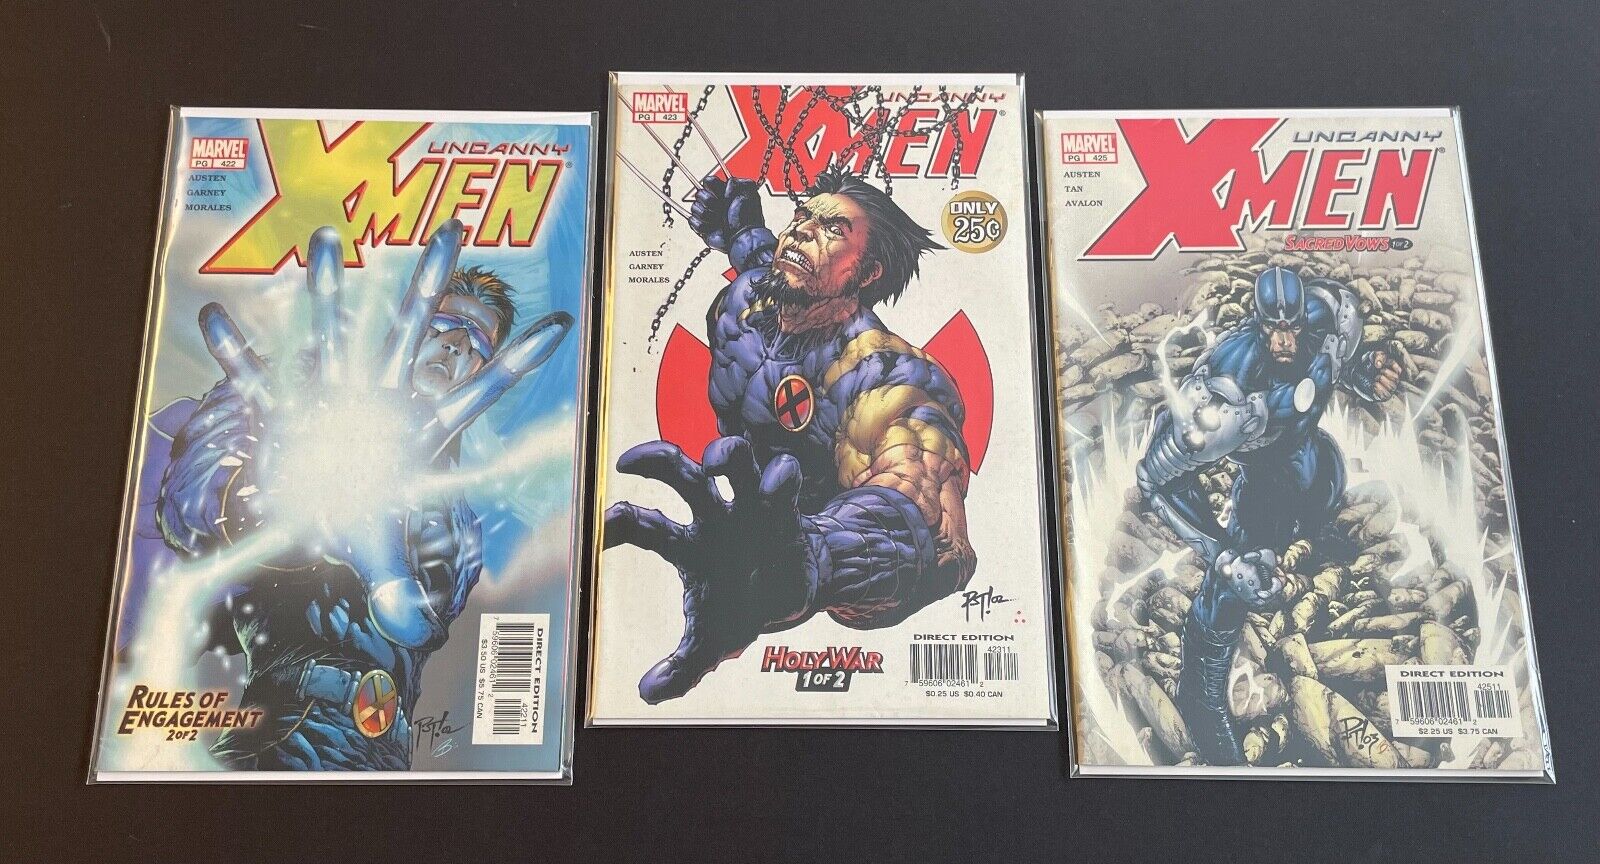 UNCANNY X-MEN #422, 423, 425 (Marvel 2003) 3 comics DIRT CHEAP! Gemini mailer